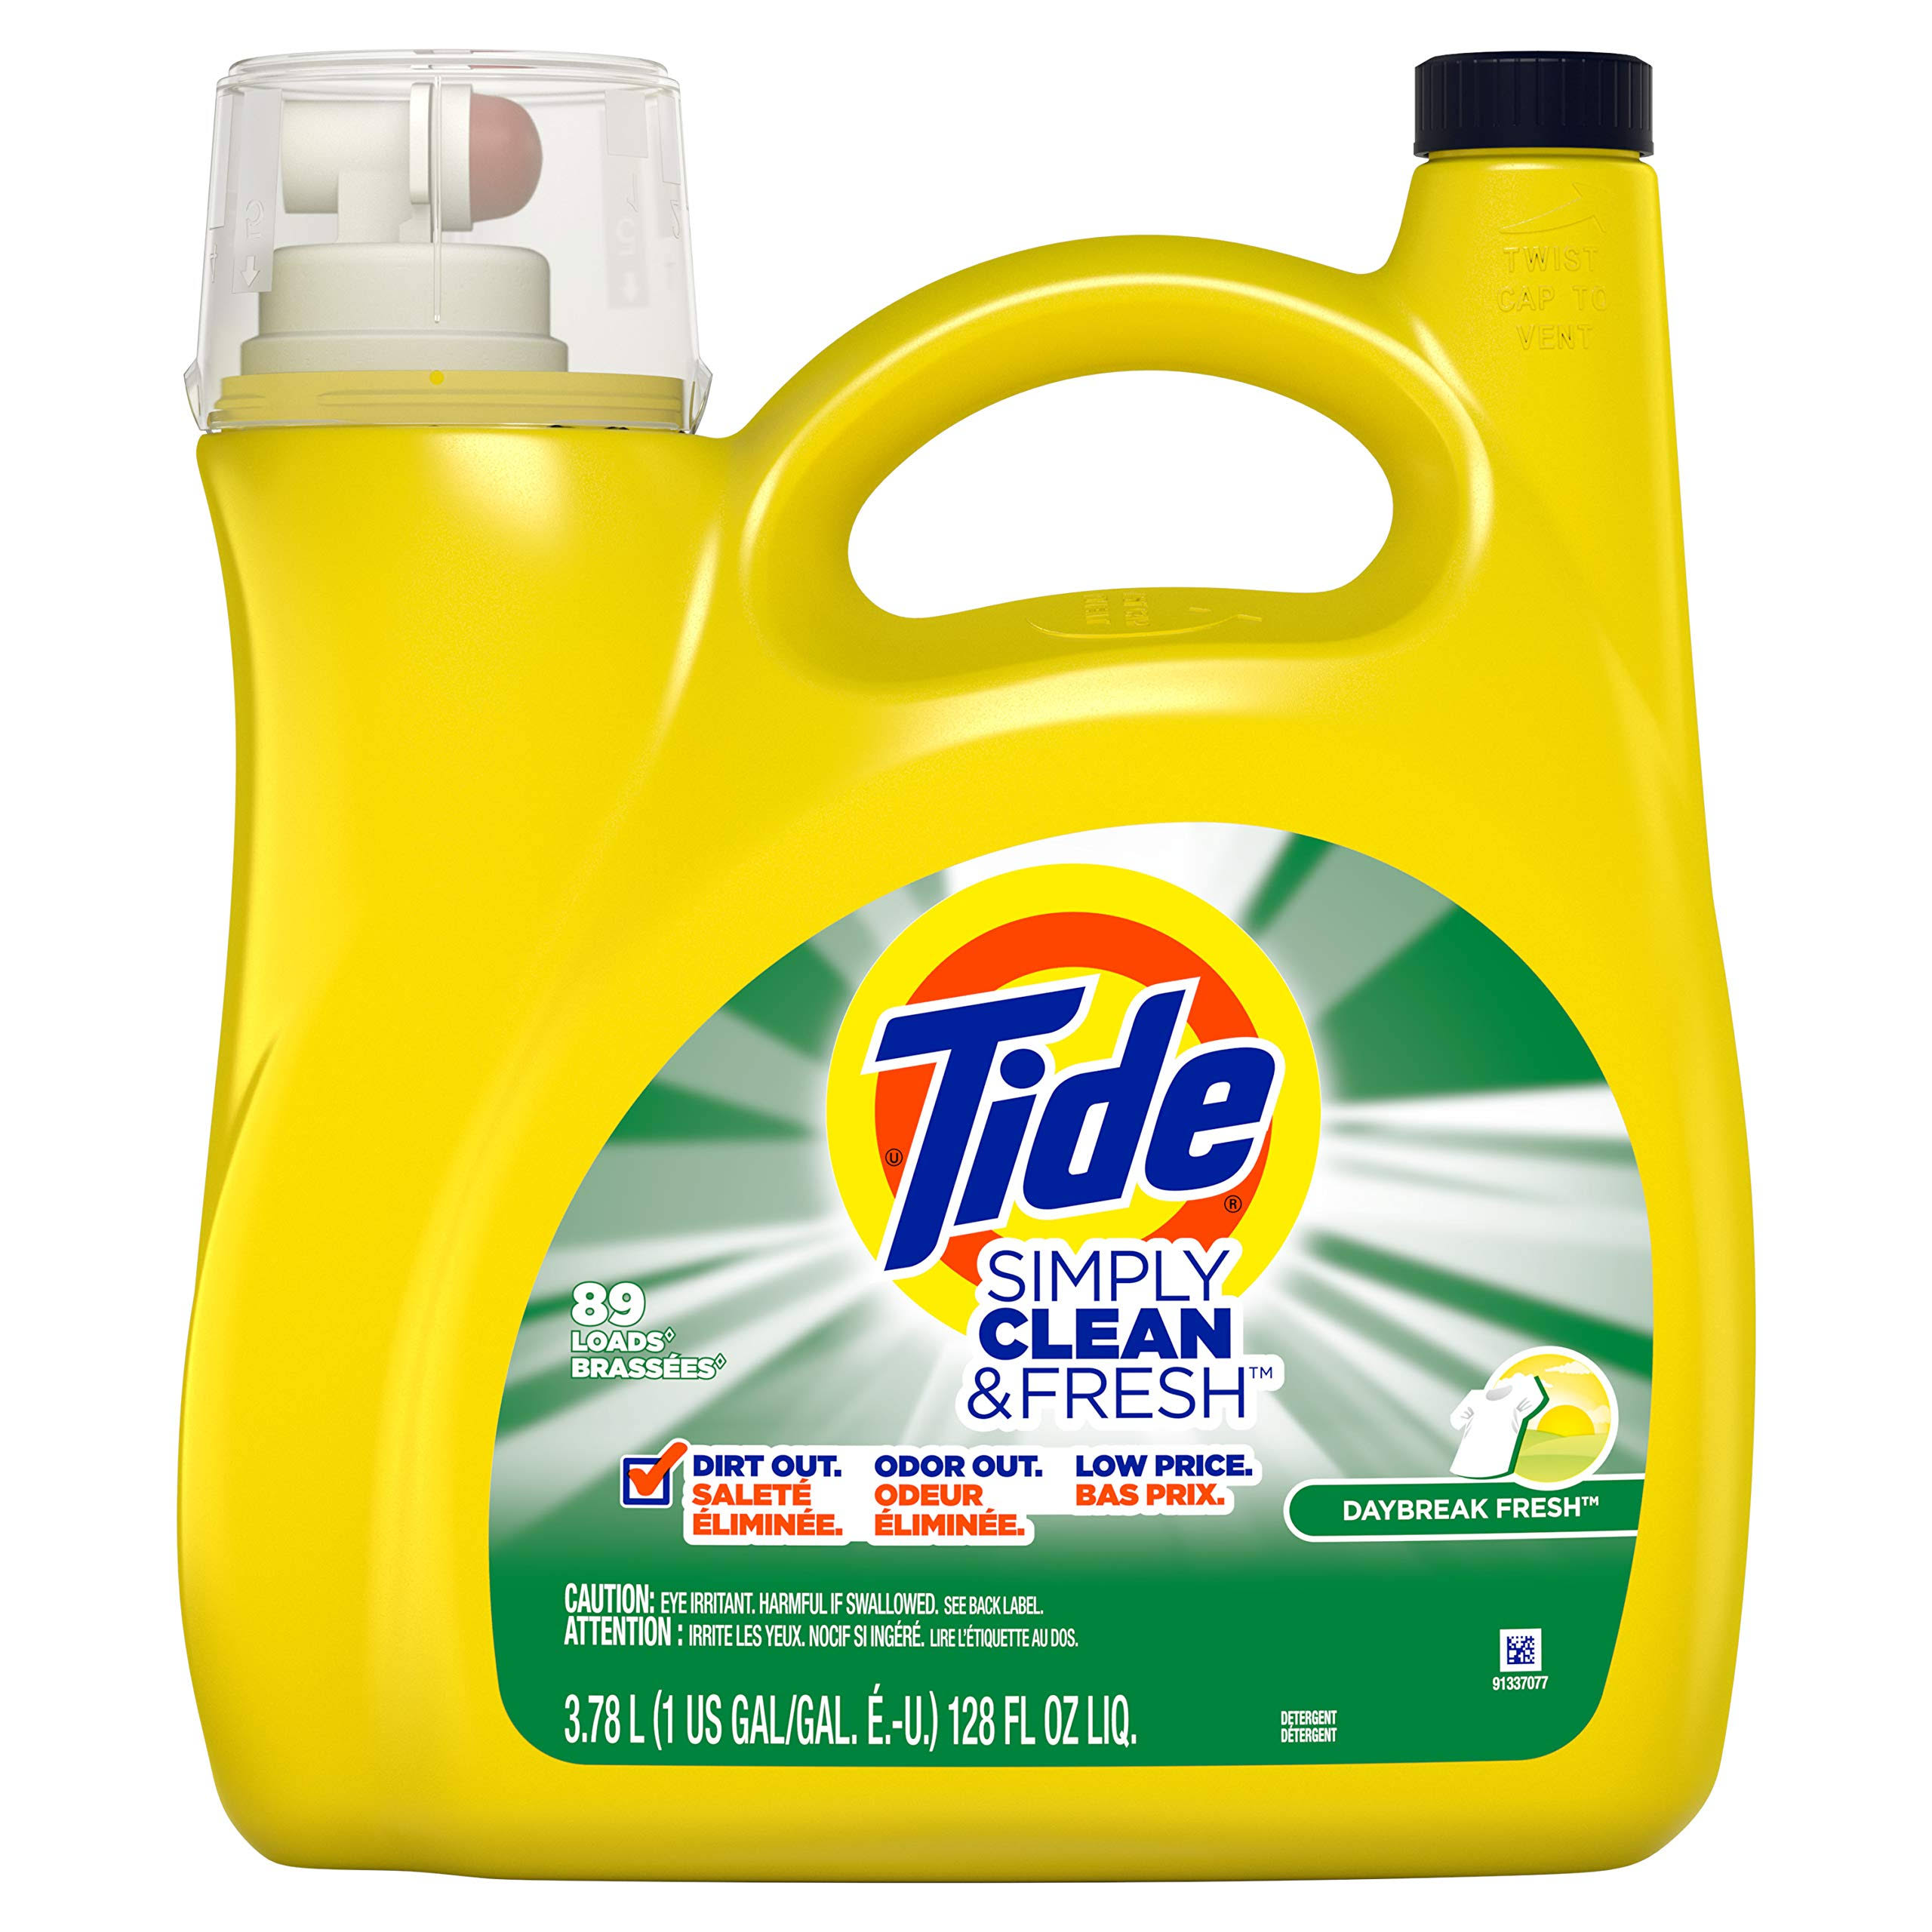 Tide Simply Clean & Fresh Detergent, Daybreak Fresh - 128 fl oz